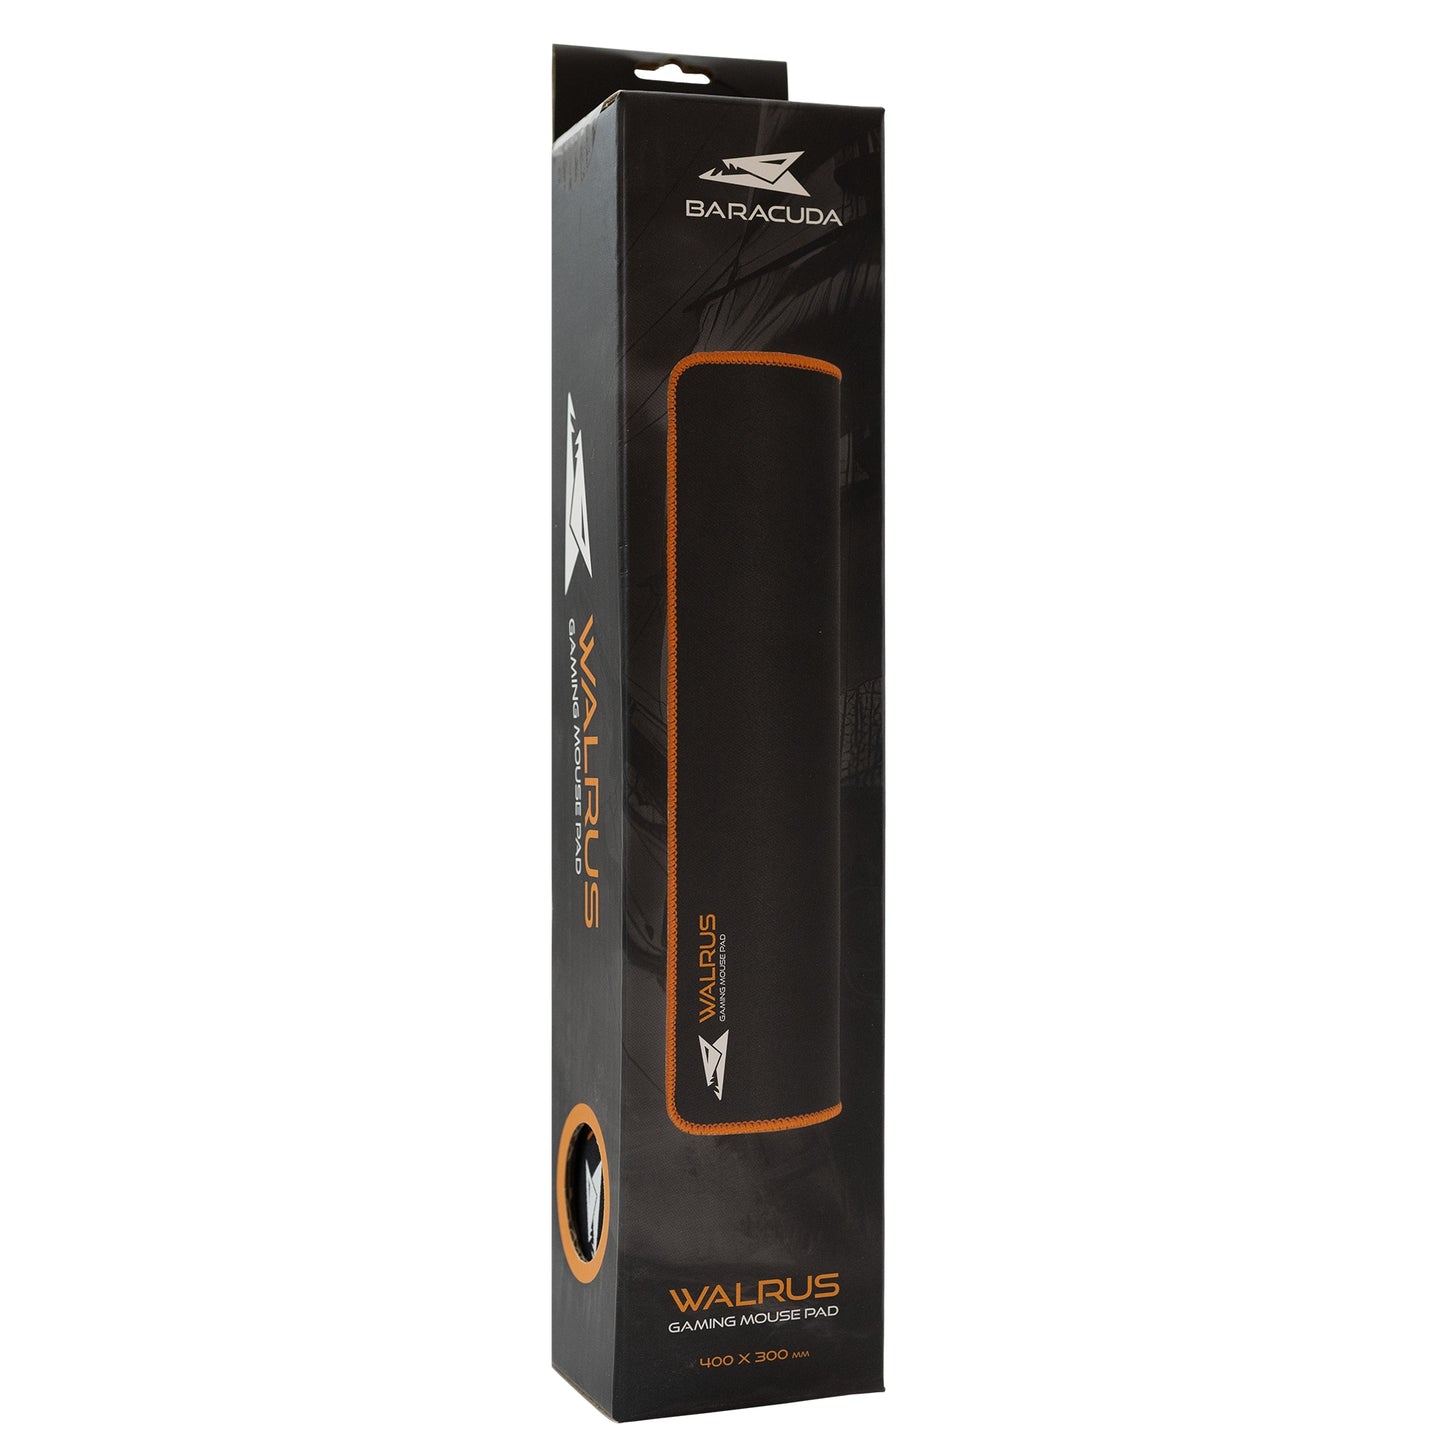 Baracuda BGMP-021 Walrus Black/Orange 400x300 L - Medium Gaming Mouse Pad